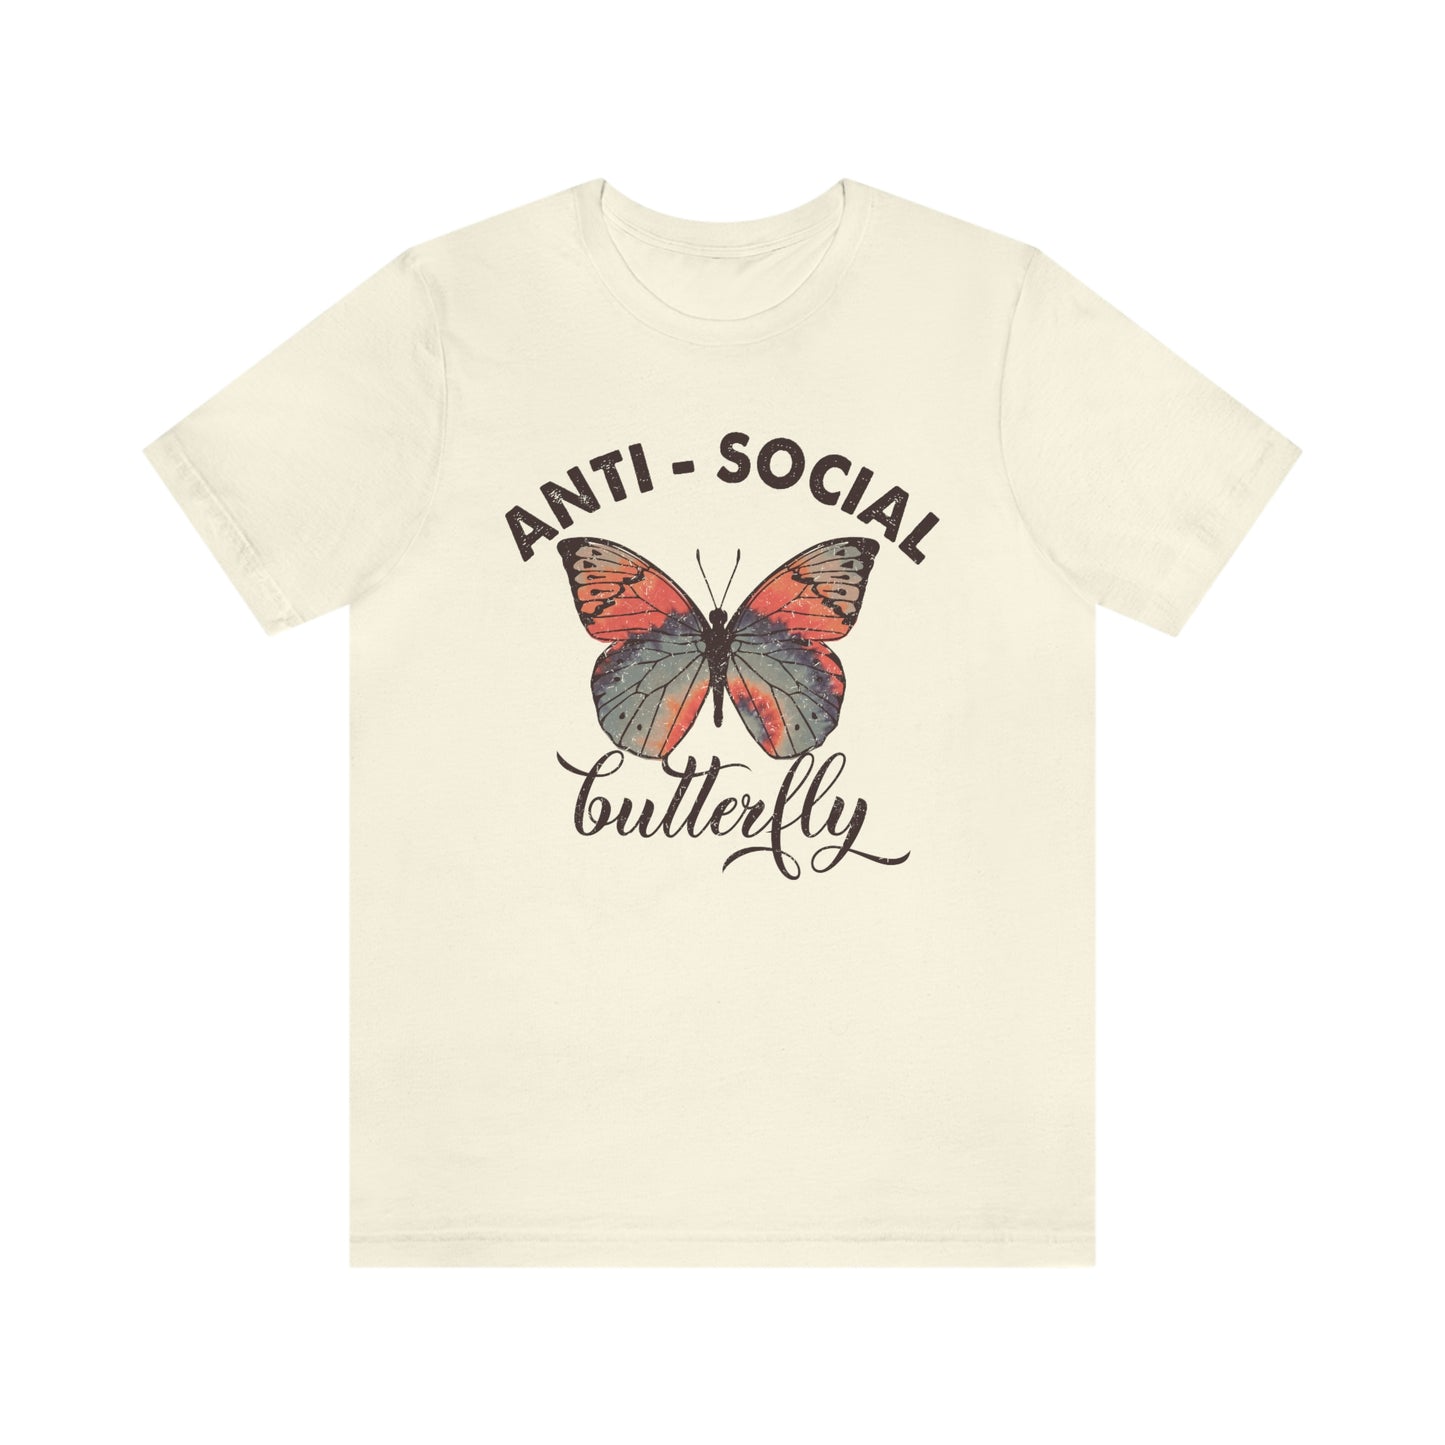 Anti-Social Butterfly Tee